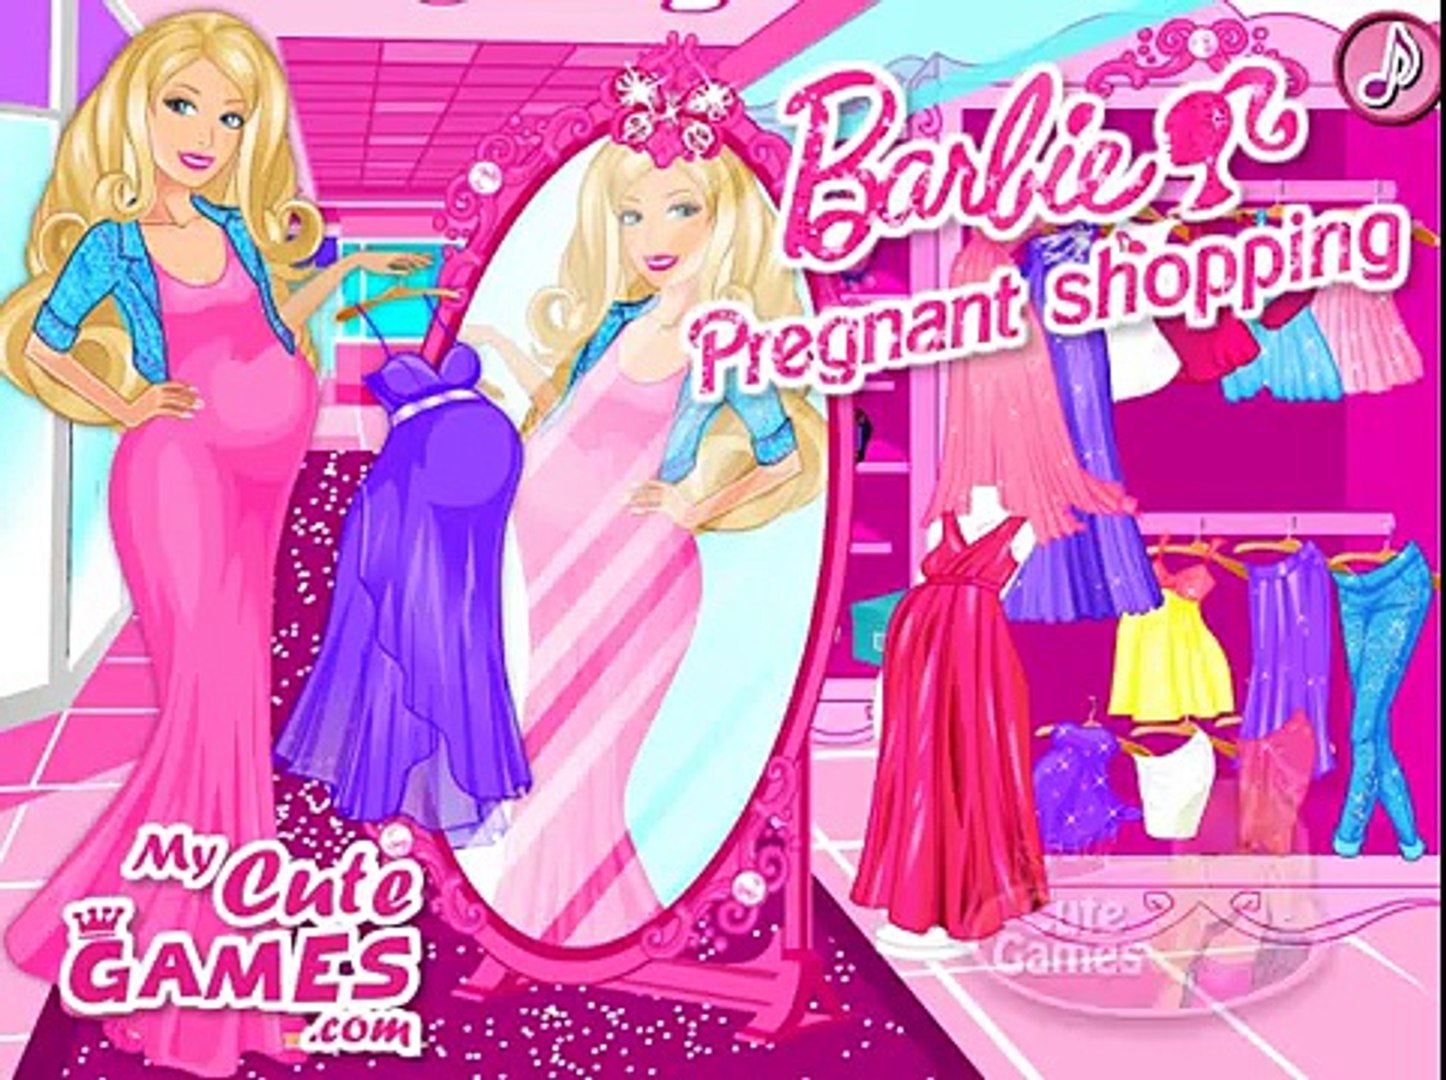 Barbie Having A Baby Games, Buy Now, Hot Sale, 59% OFF,  www.acananortheast.com